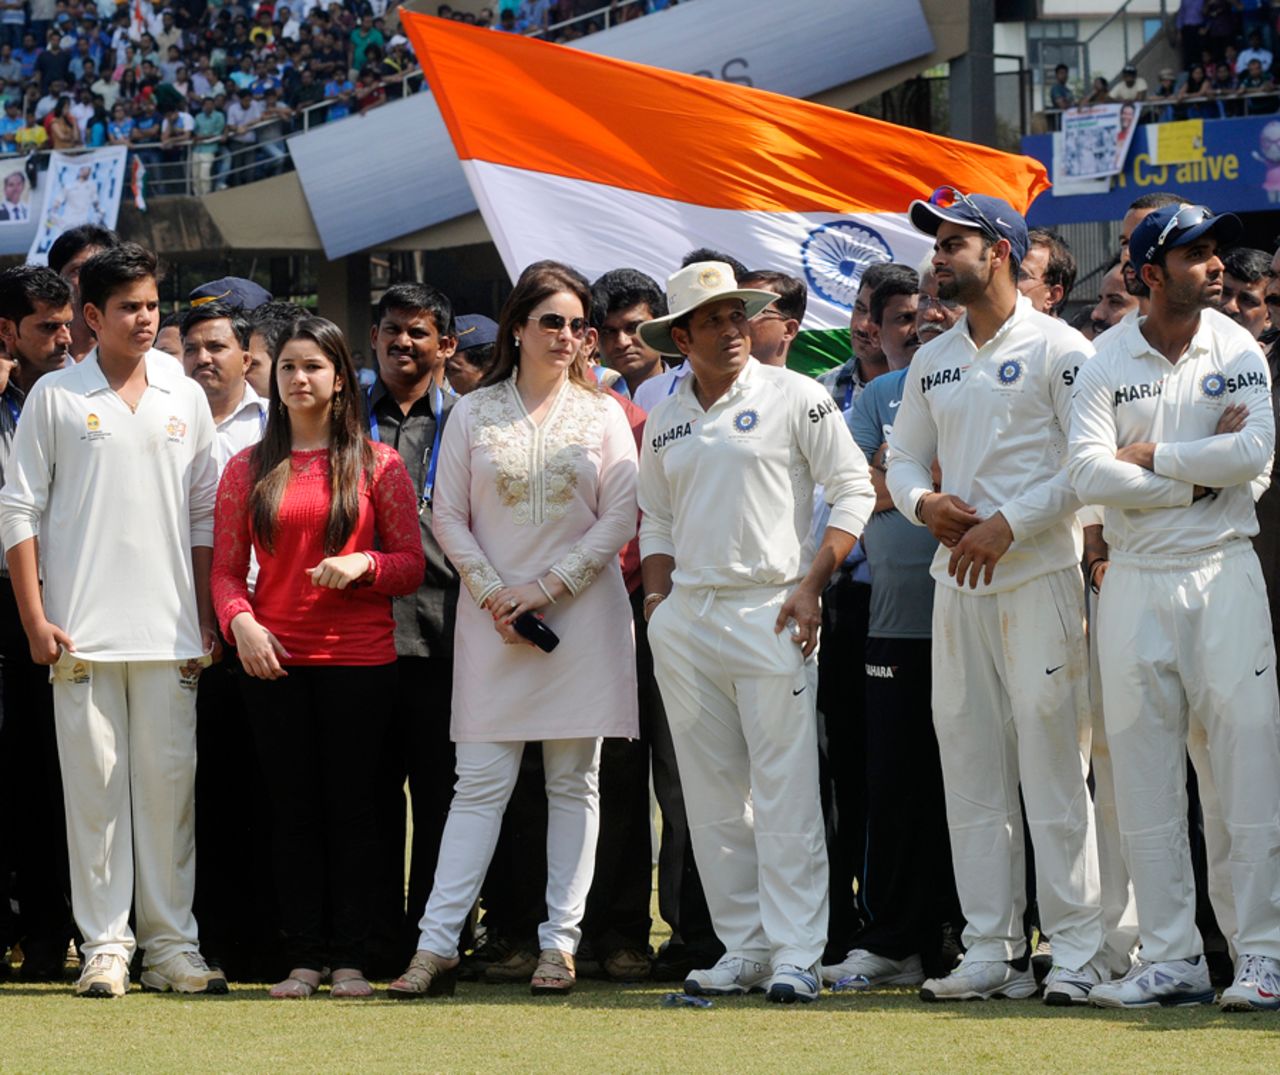 Sachin Tendulkar awaits the presentation with family and friends, India v West Indies, 2nd Test, Mumbai, 3rd day, November 16, 2013